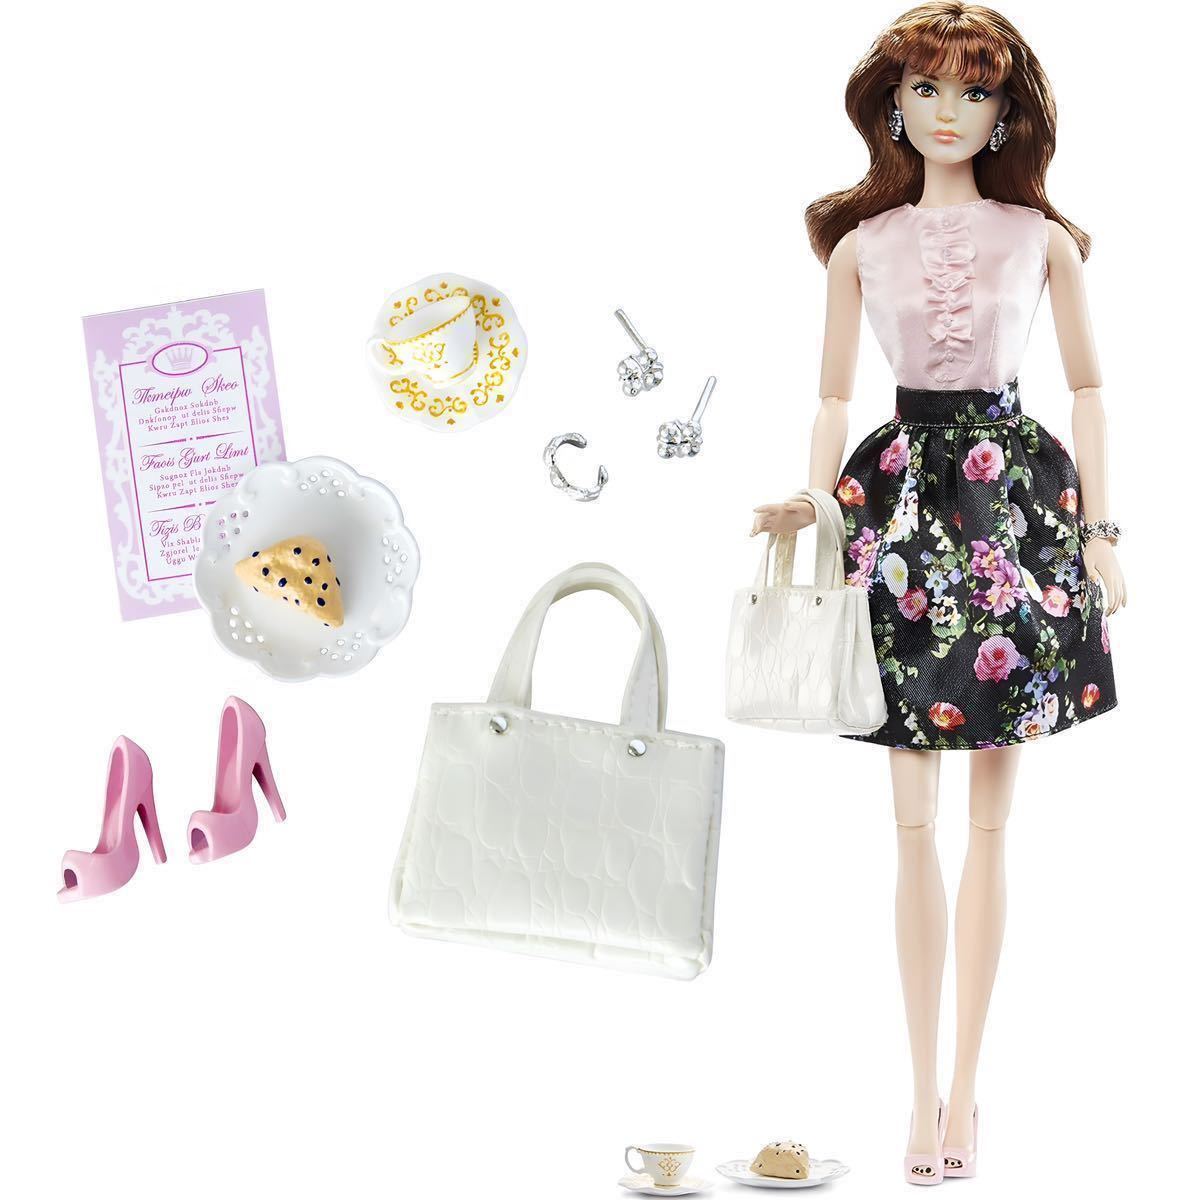 The Barbie LOOK Sweet tea バービー ルック-